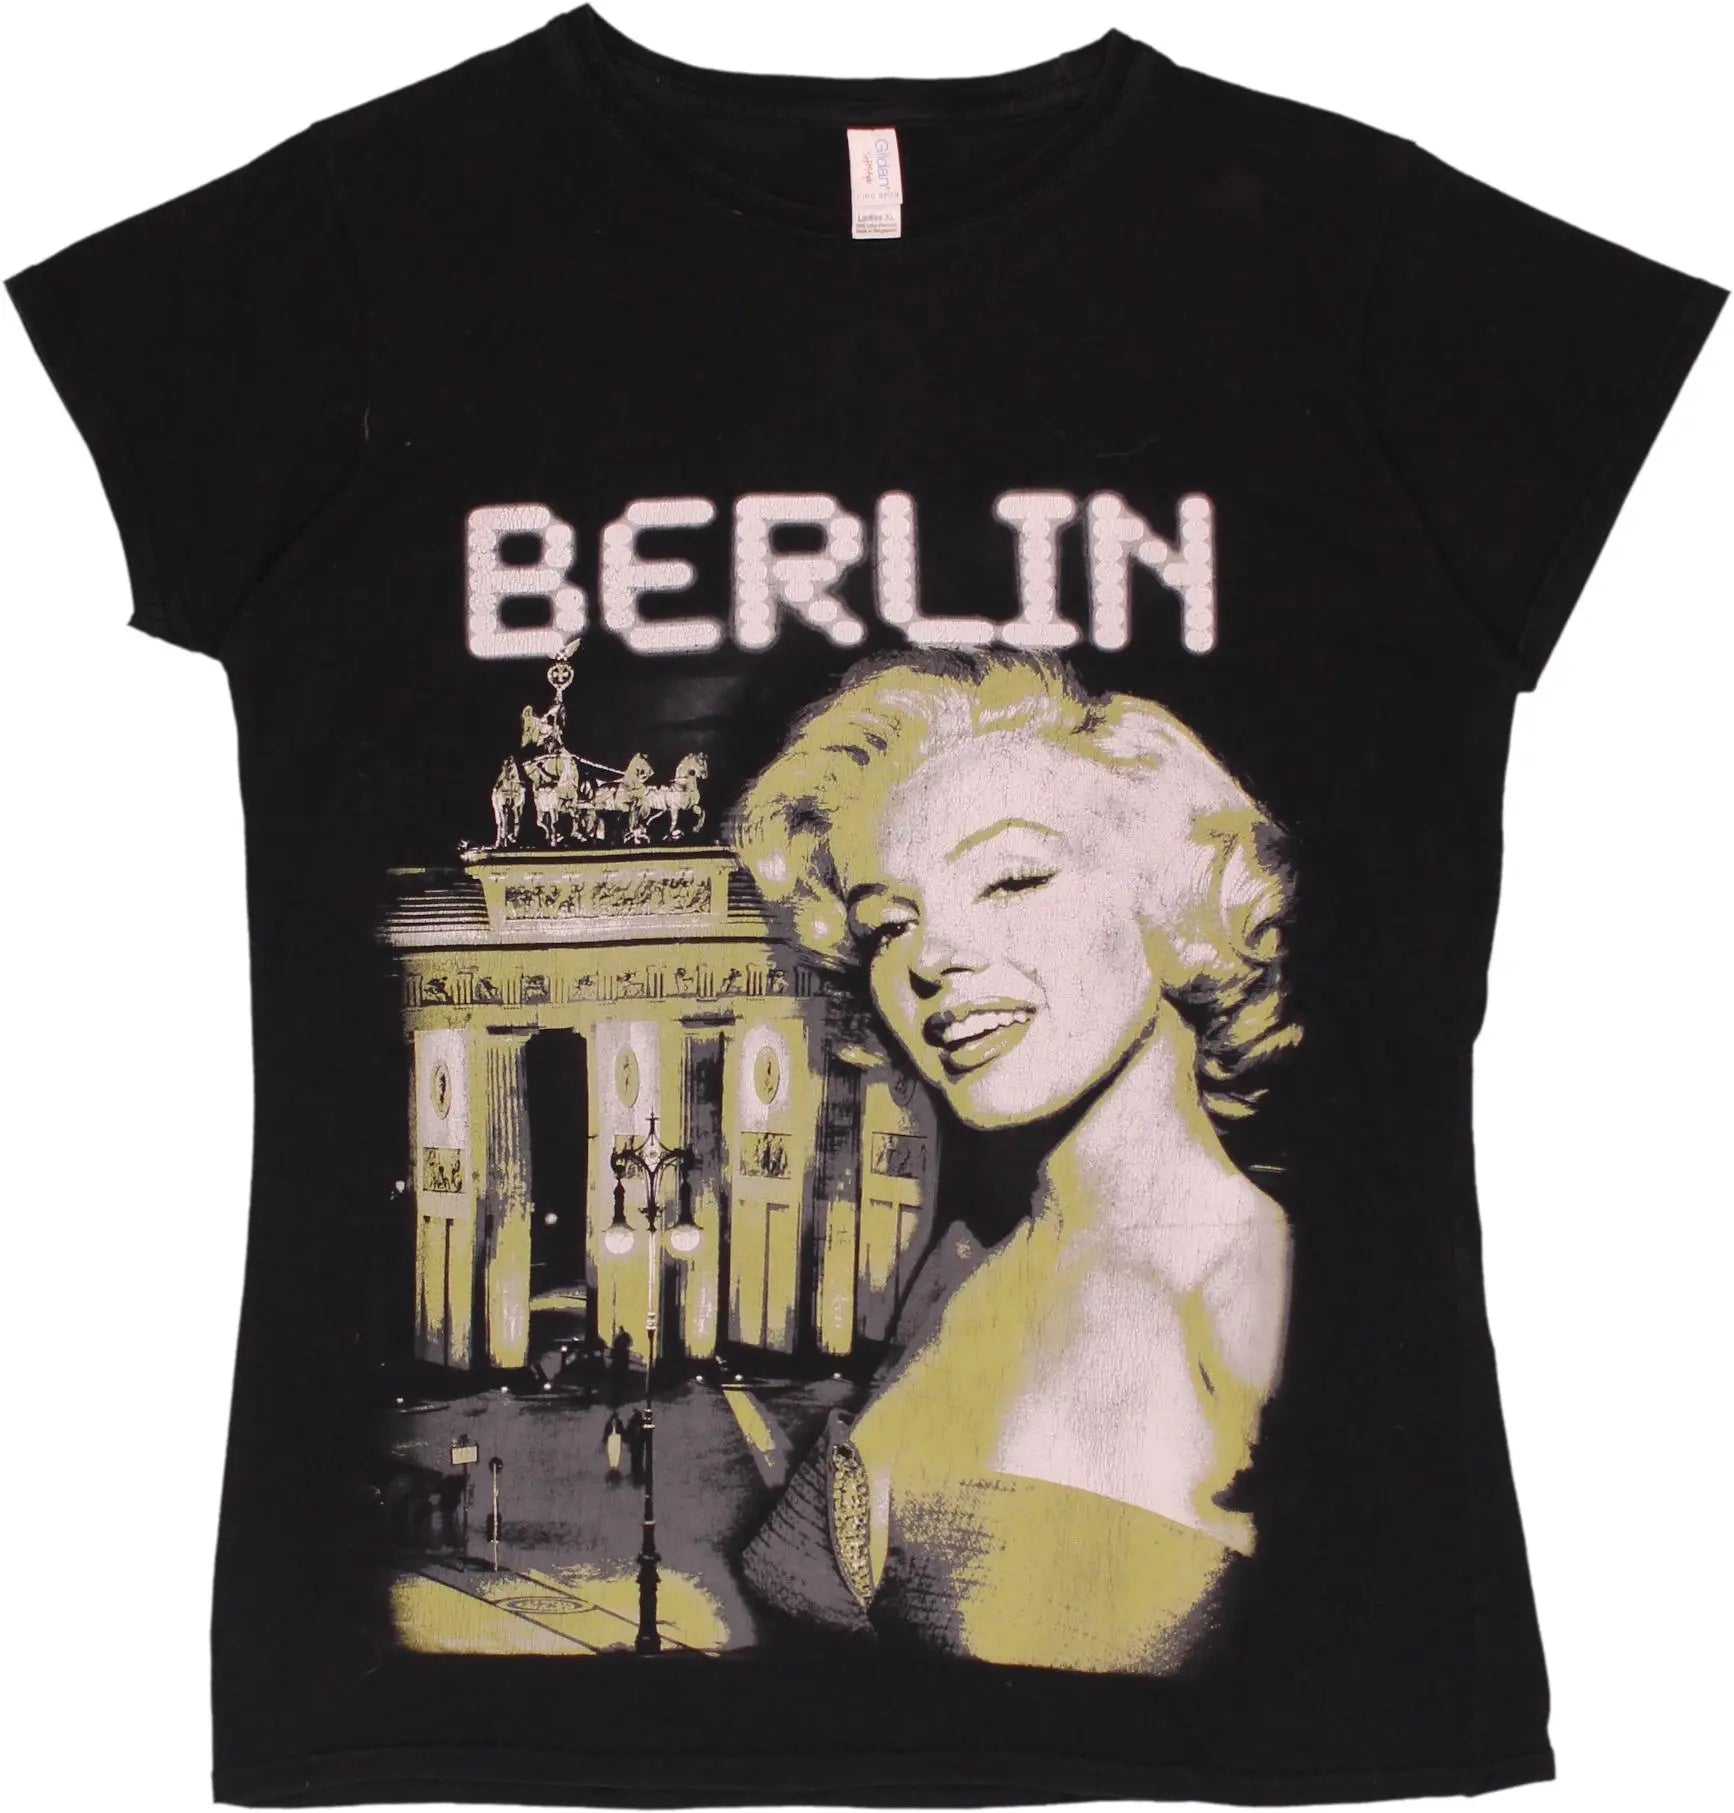 Gildan - Berlin Marilyn Monroe T-shirt- ThriftTale.com - Vintage and second handclothing